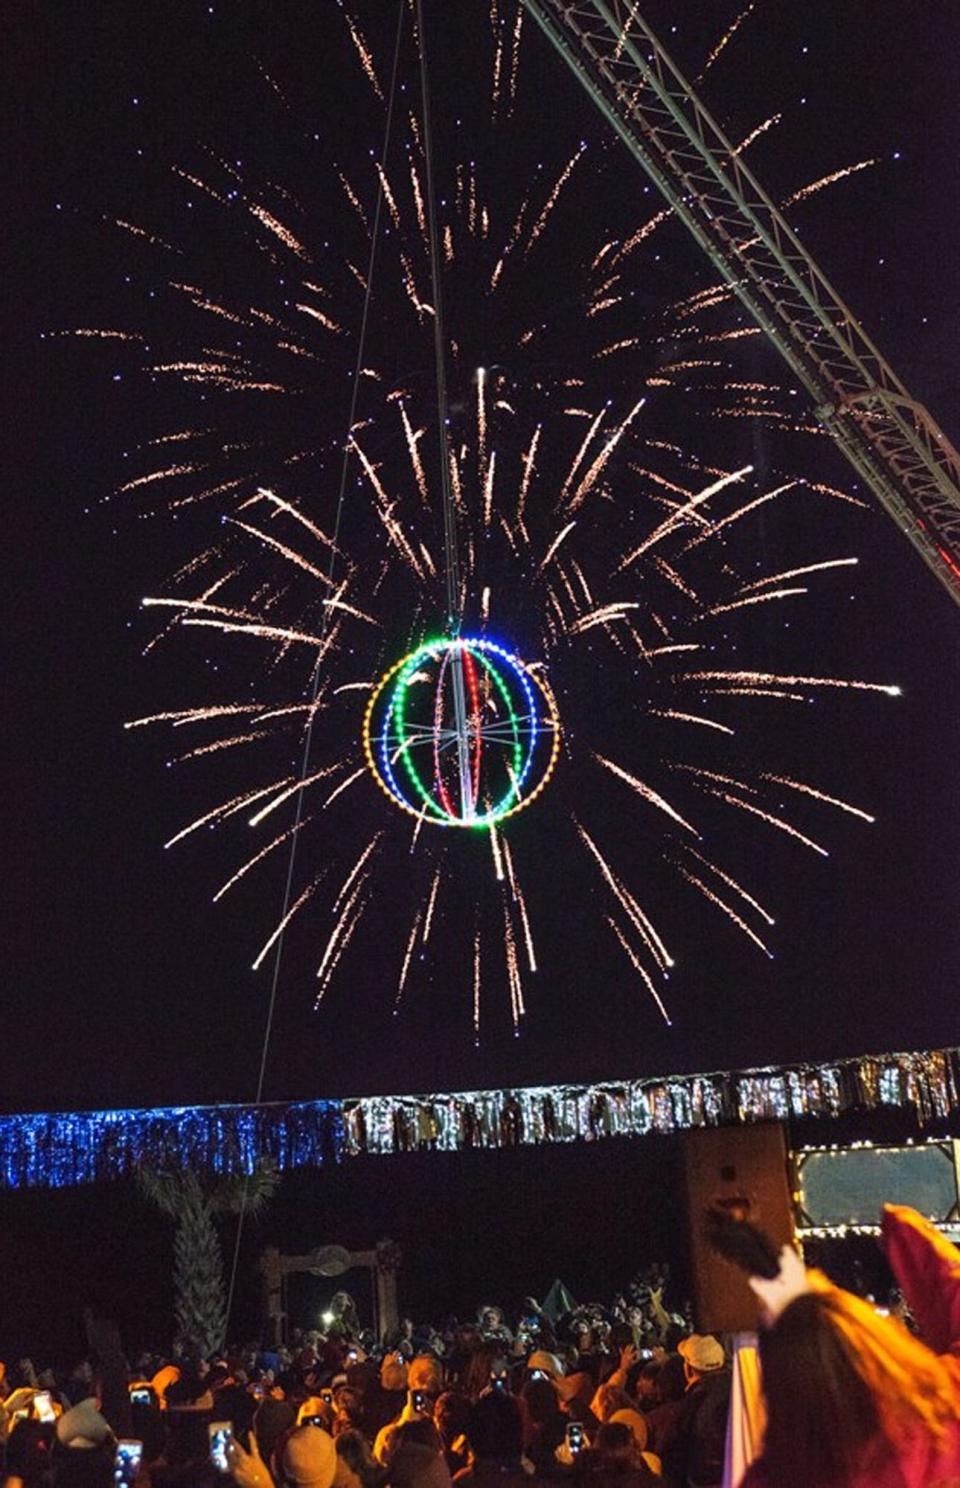 The Island of Lights New Year's Eve Celebration will be held Dec. 31 at Carolina Beach.